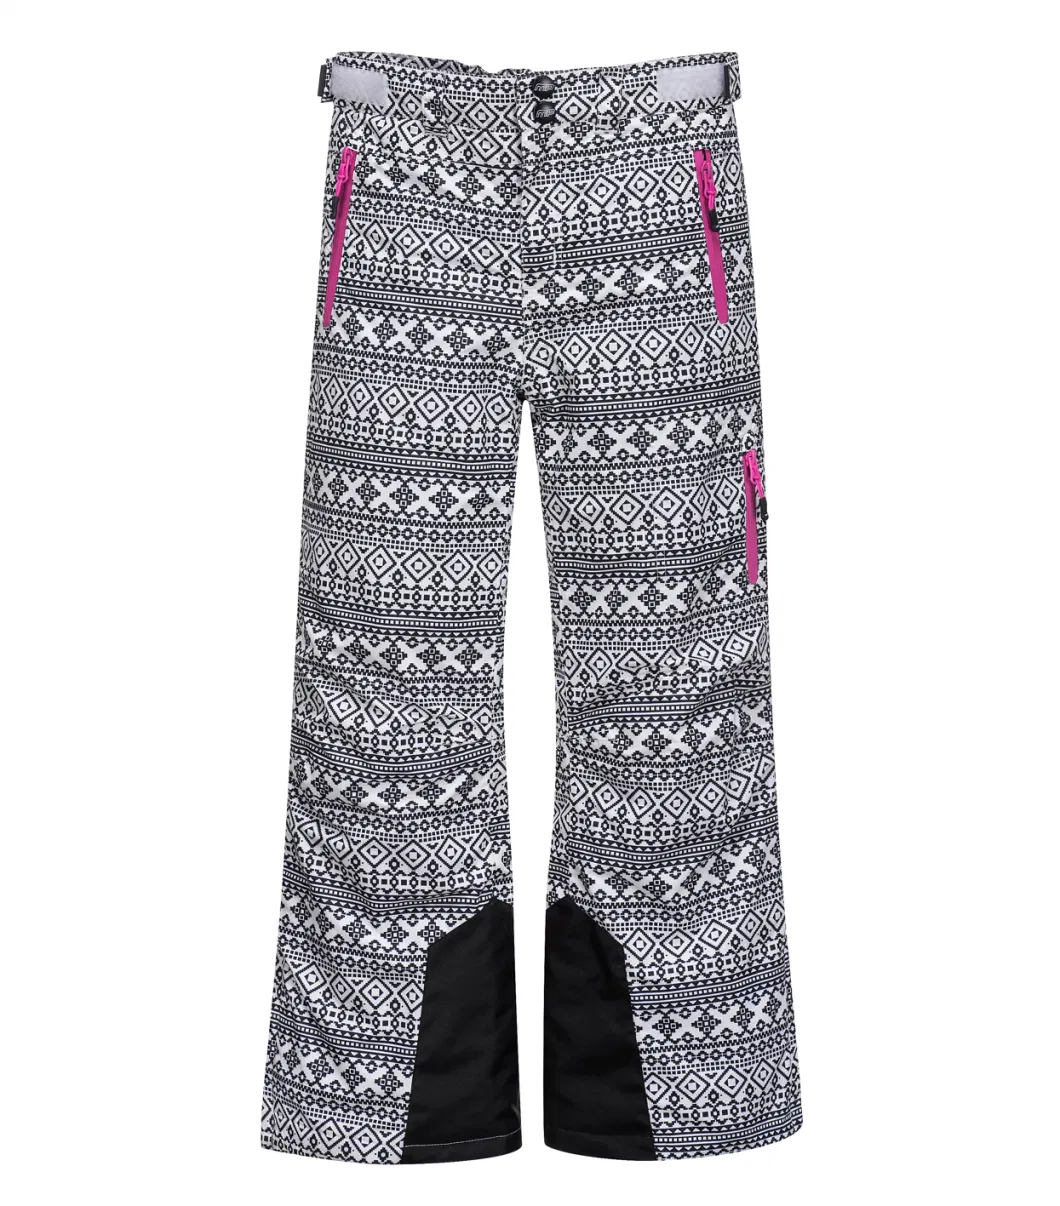 Insulated waterproof Kid Ski Pants for Girls Outdoor Skiwear